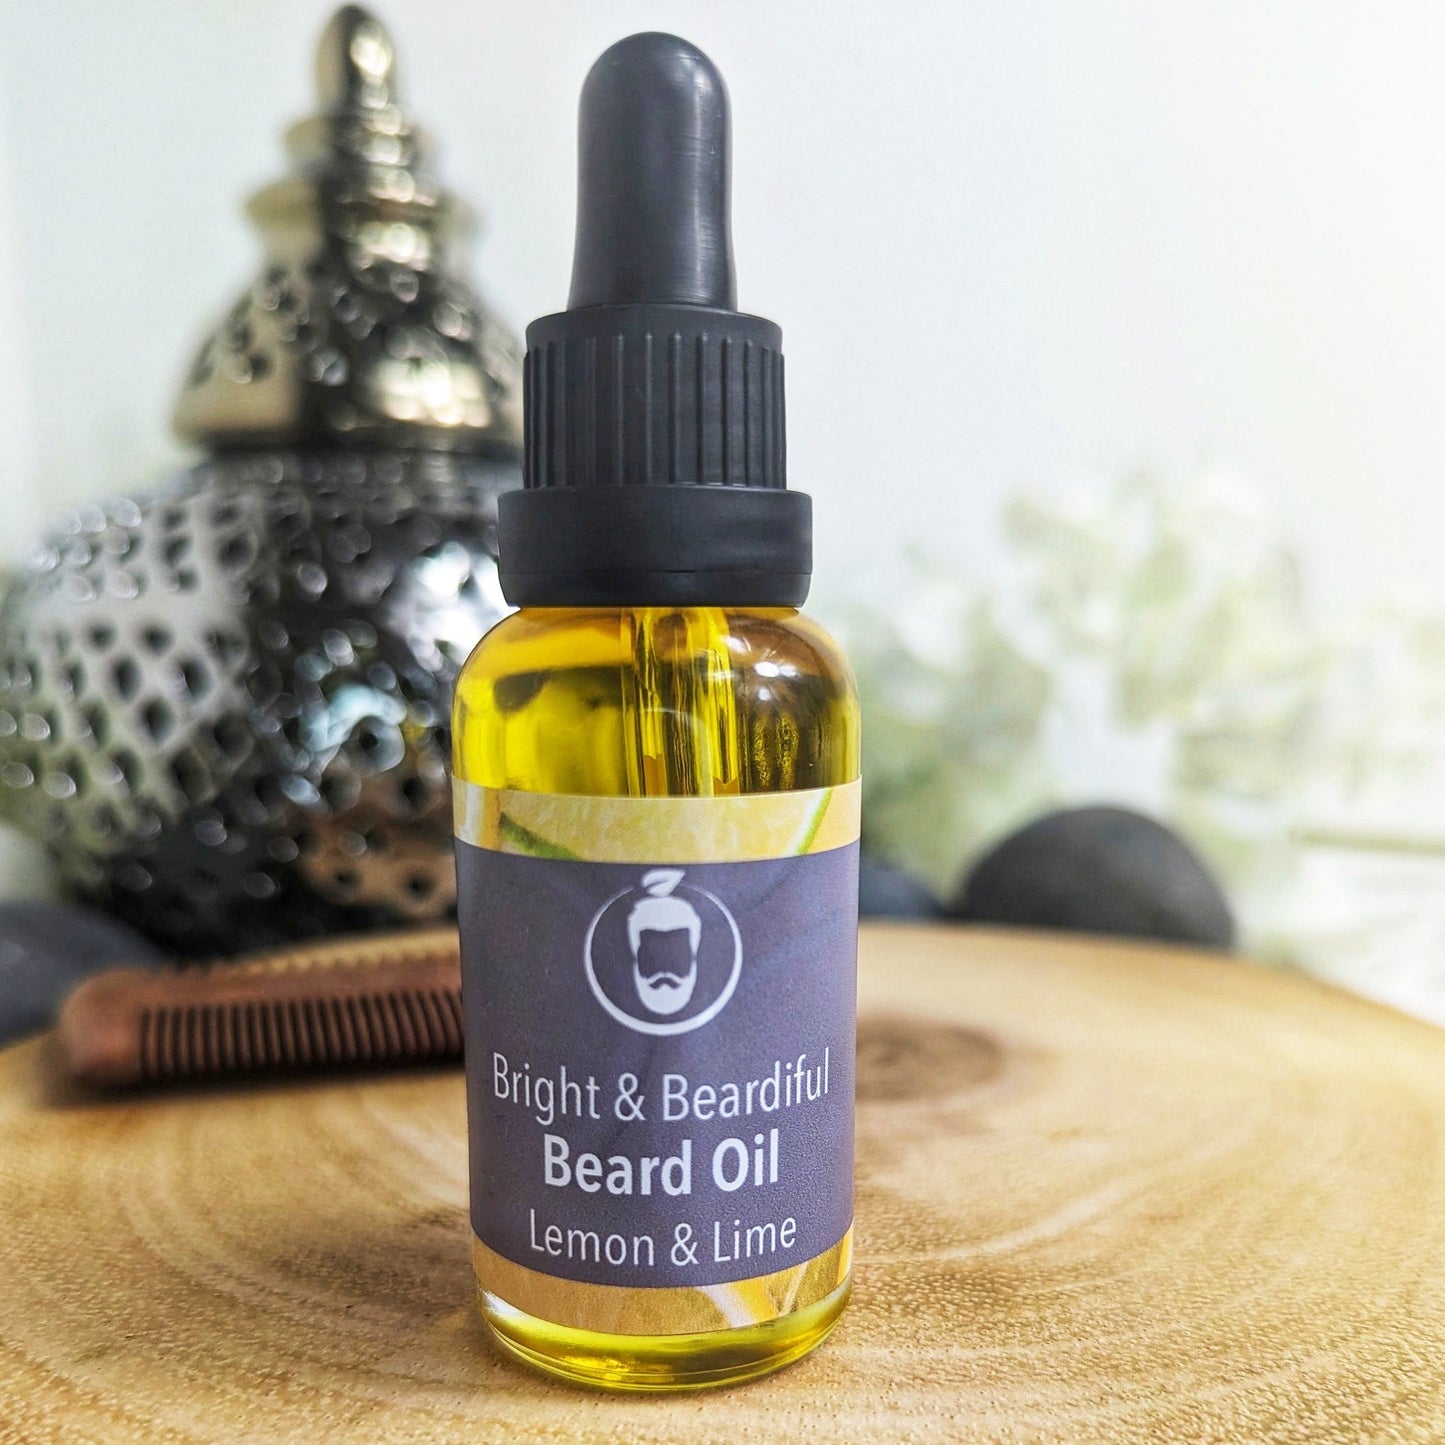 Beardiful Beard Oil - The Full 30ml Set - All 5 Fragrances